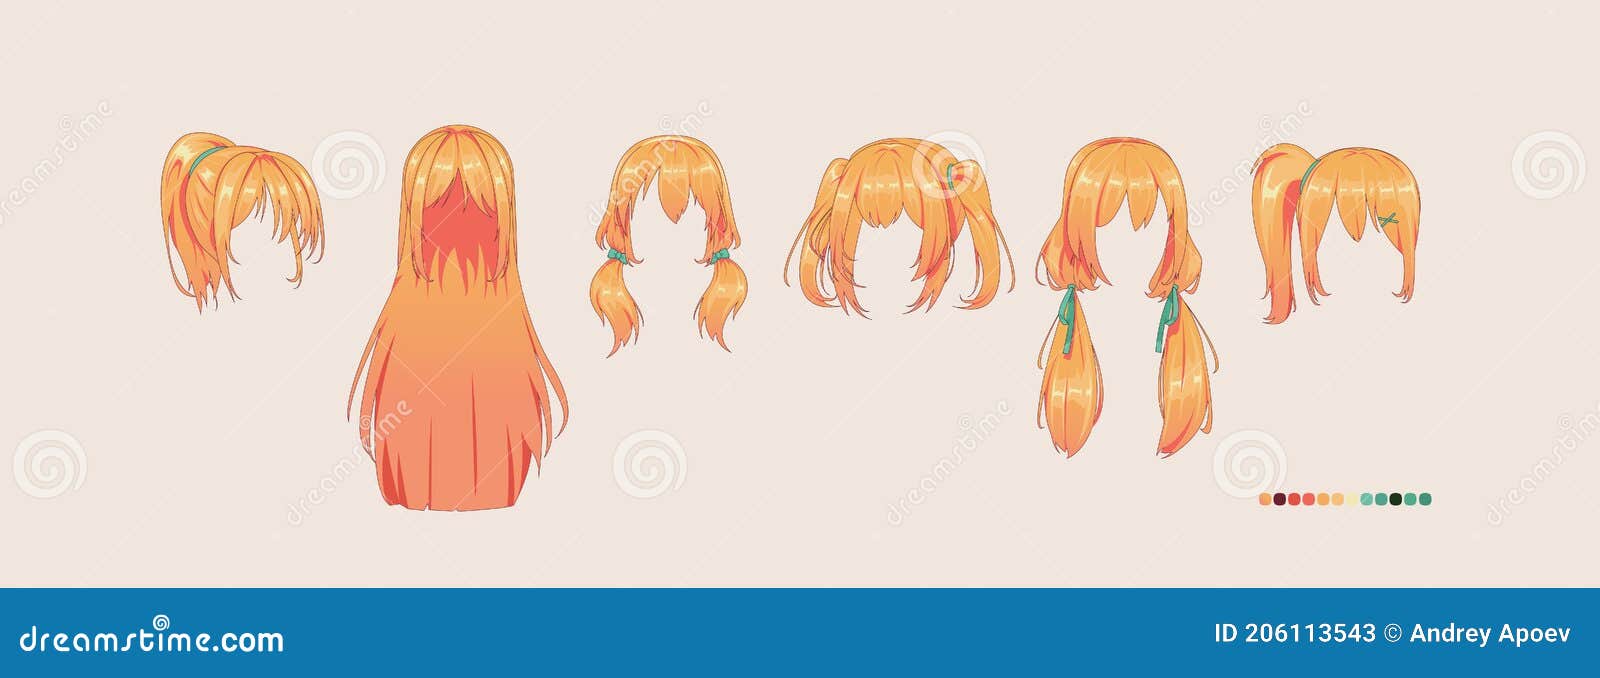 Learn Manga Basics Female Hair Styles V2 By Naschi On Girl hair drawing,  Drawing hair tutorial, Anime girl hairstyles, hair anime style